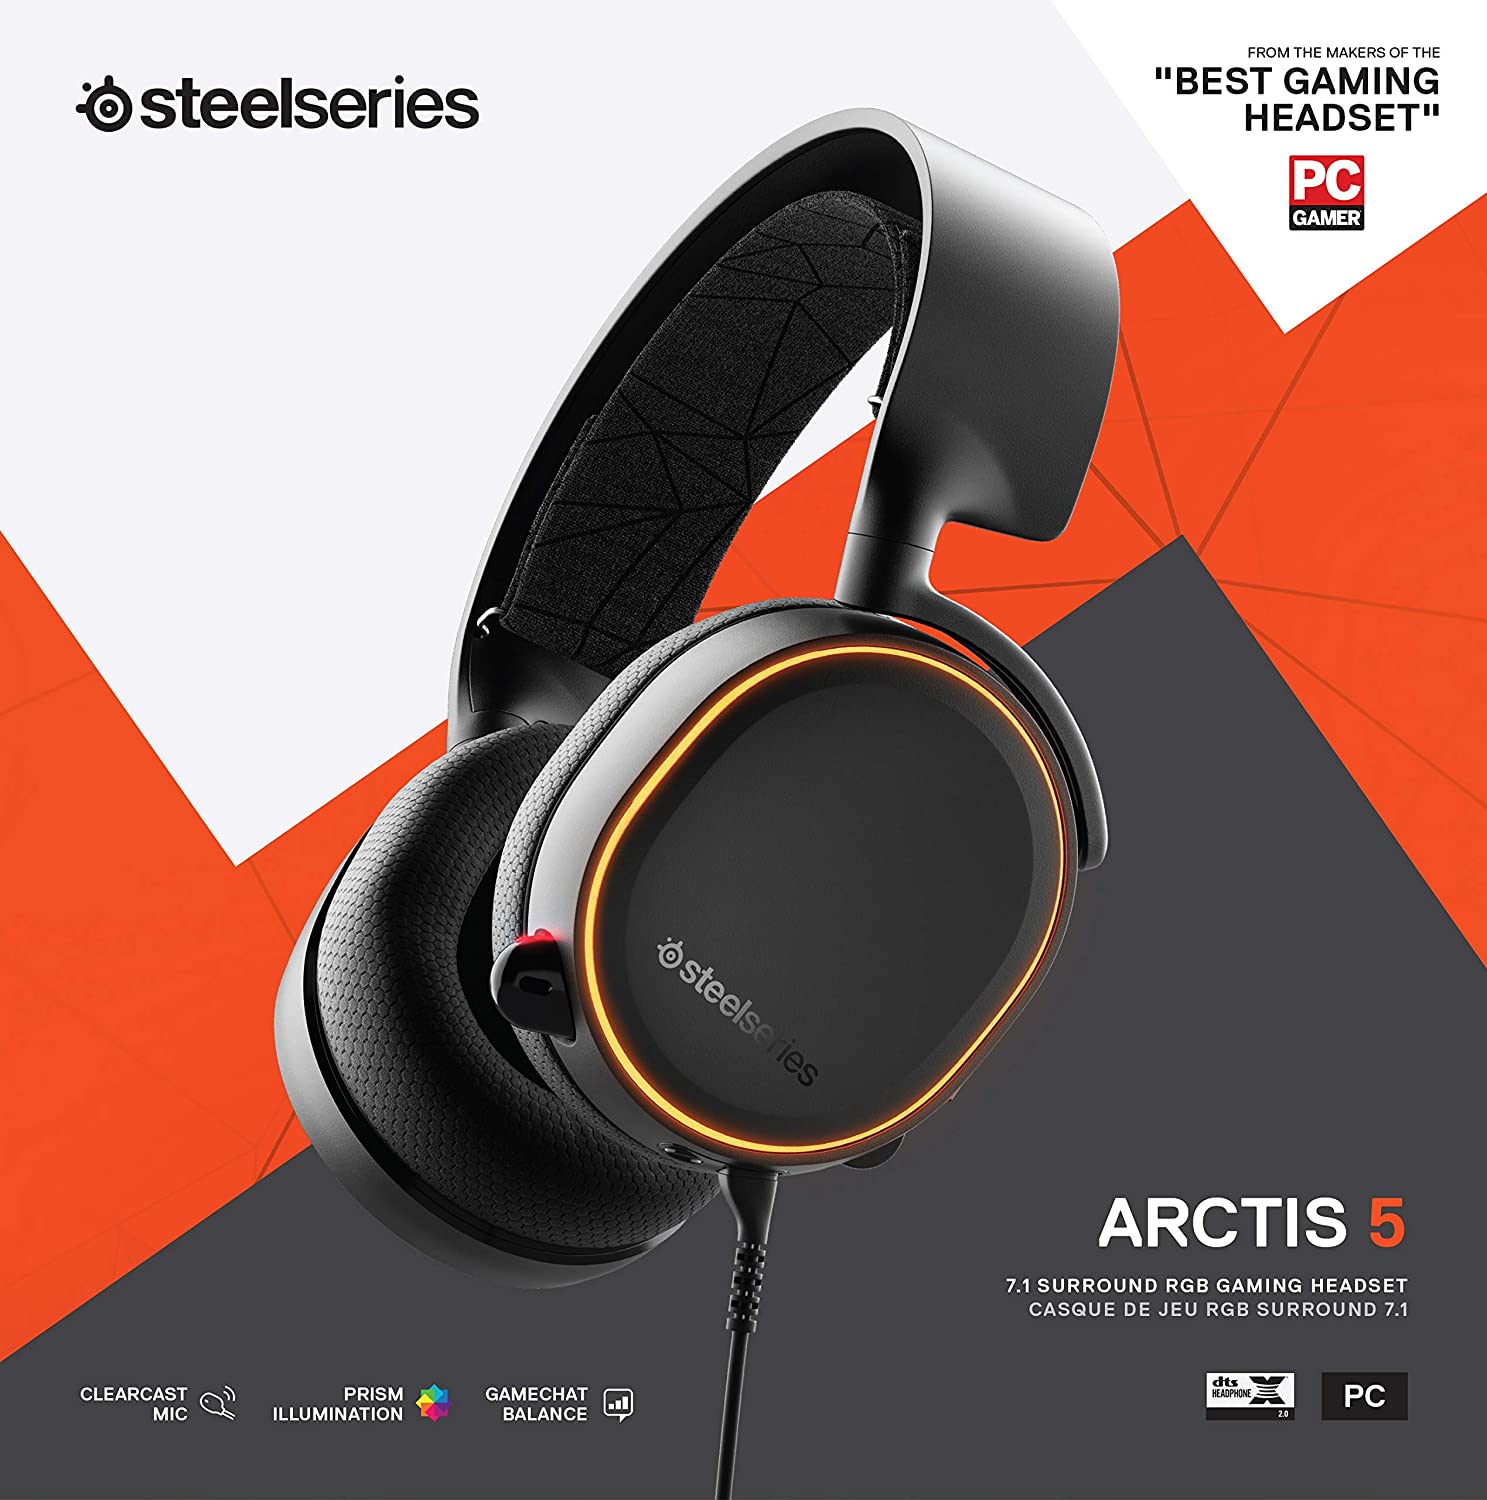 SteelSeries Arctis 5 2019 Edition All-Platform Gaming Headset - Black